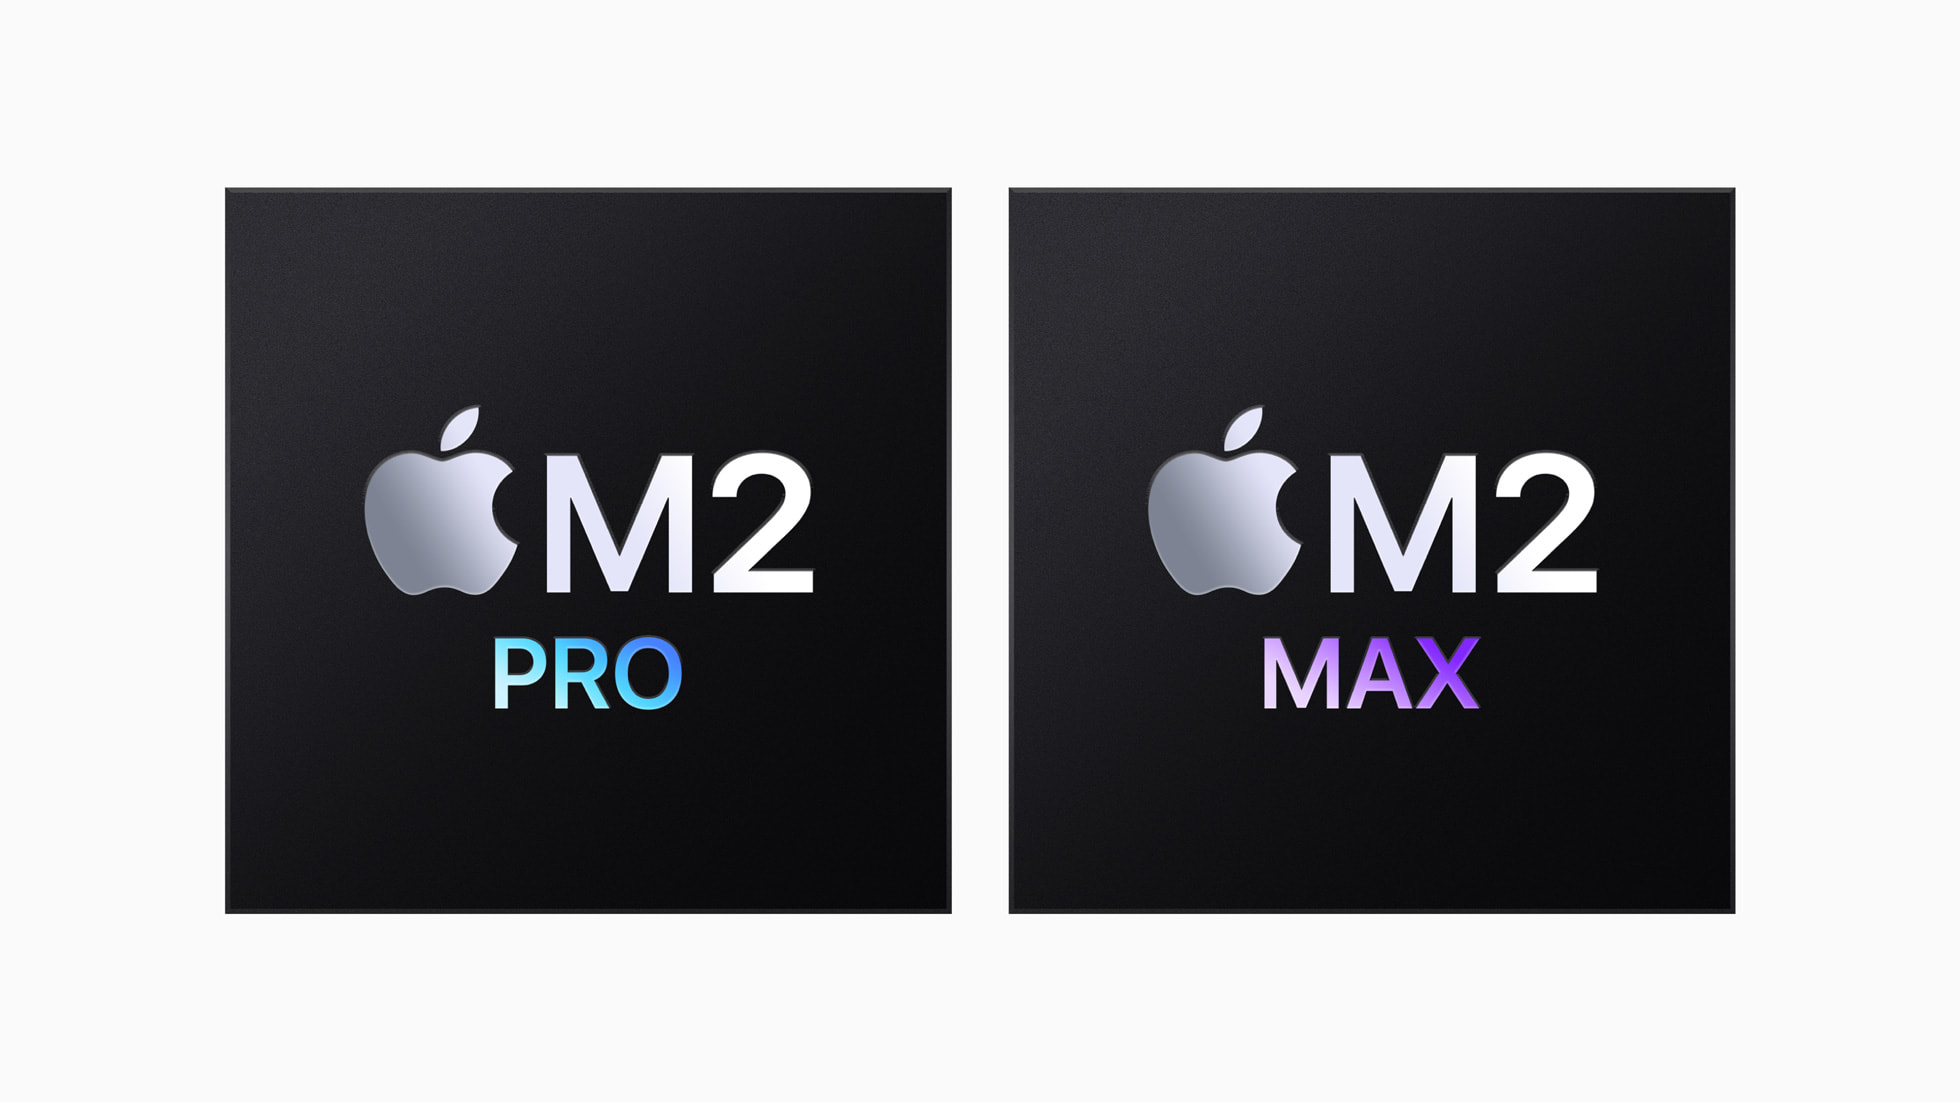 Apple חושפת את מעבדי M2 Pro ו-M2 Max: שבבים מהדור הבא עבור זרימות עבודה ברמה עוצמתית וחדשנית שלא נראתה לפני